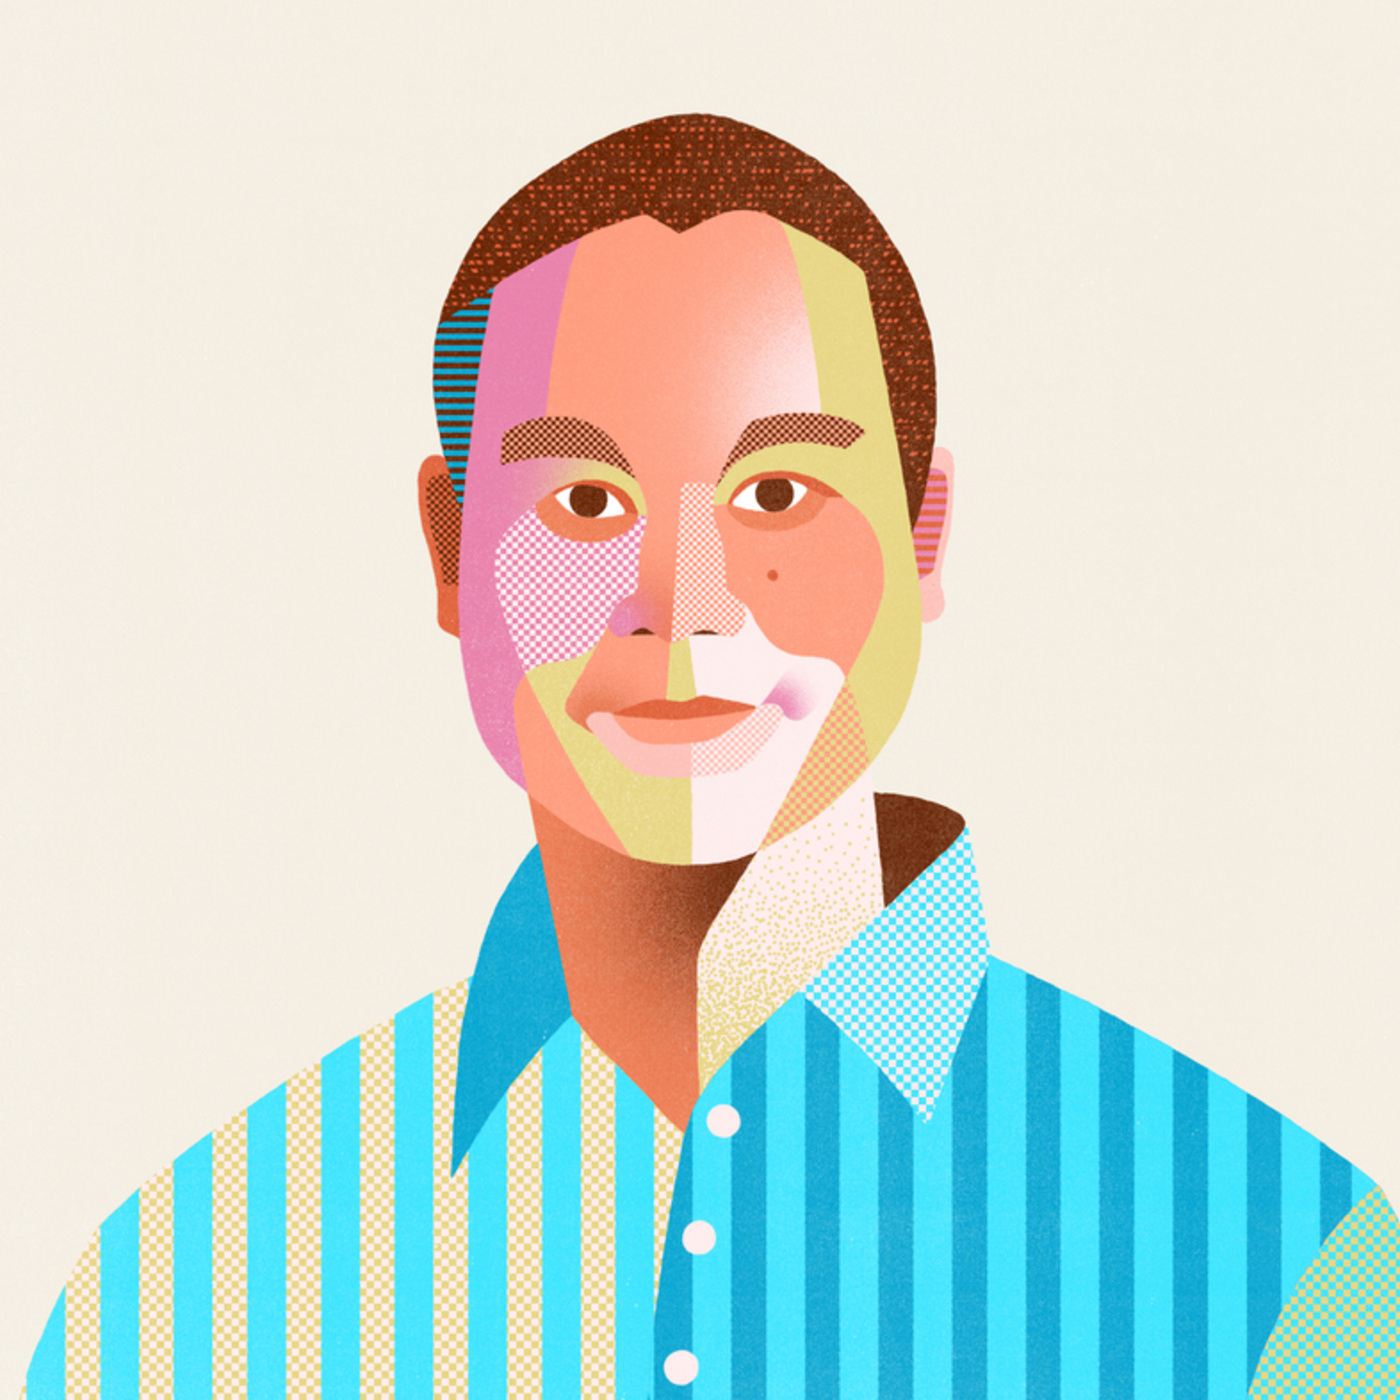 Zappos: Tony Hsieh